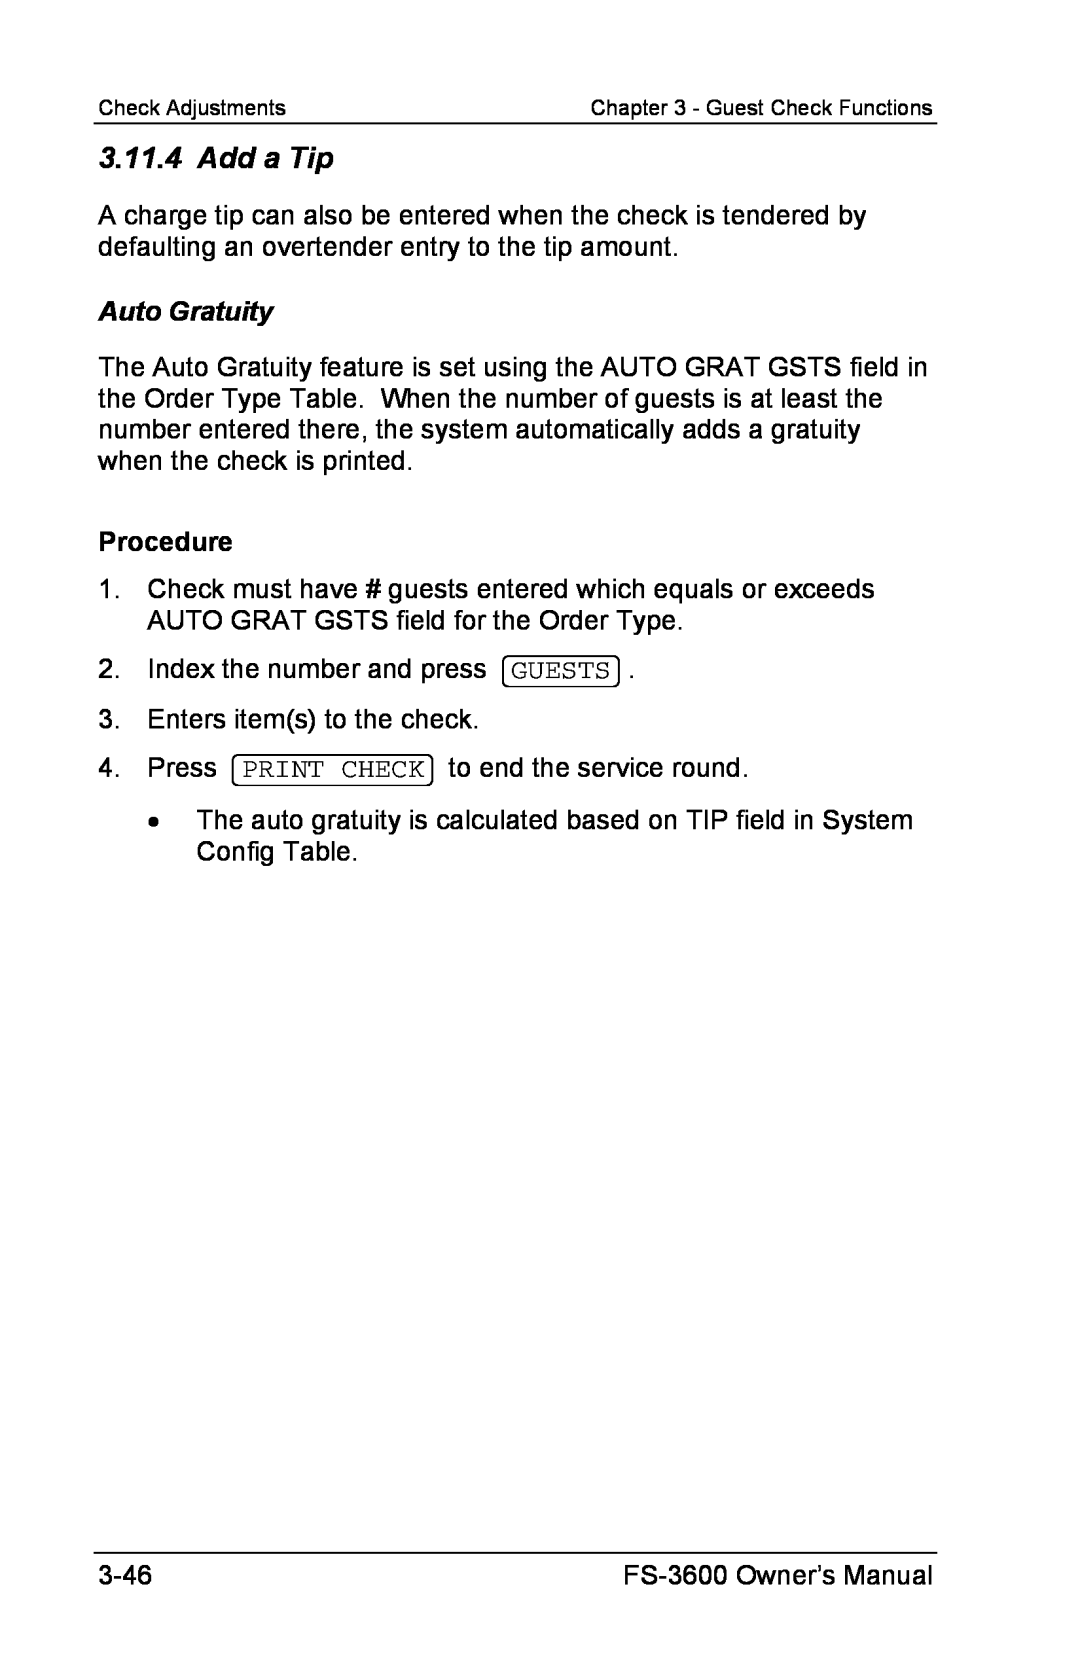 Toshiba FS-3600 owner manual Add a Tip, Auto Gratuity, Procedure 